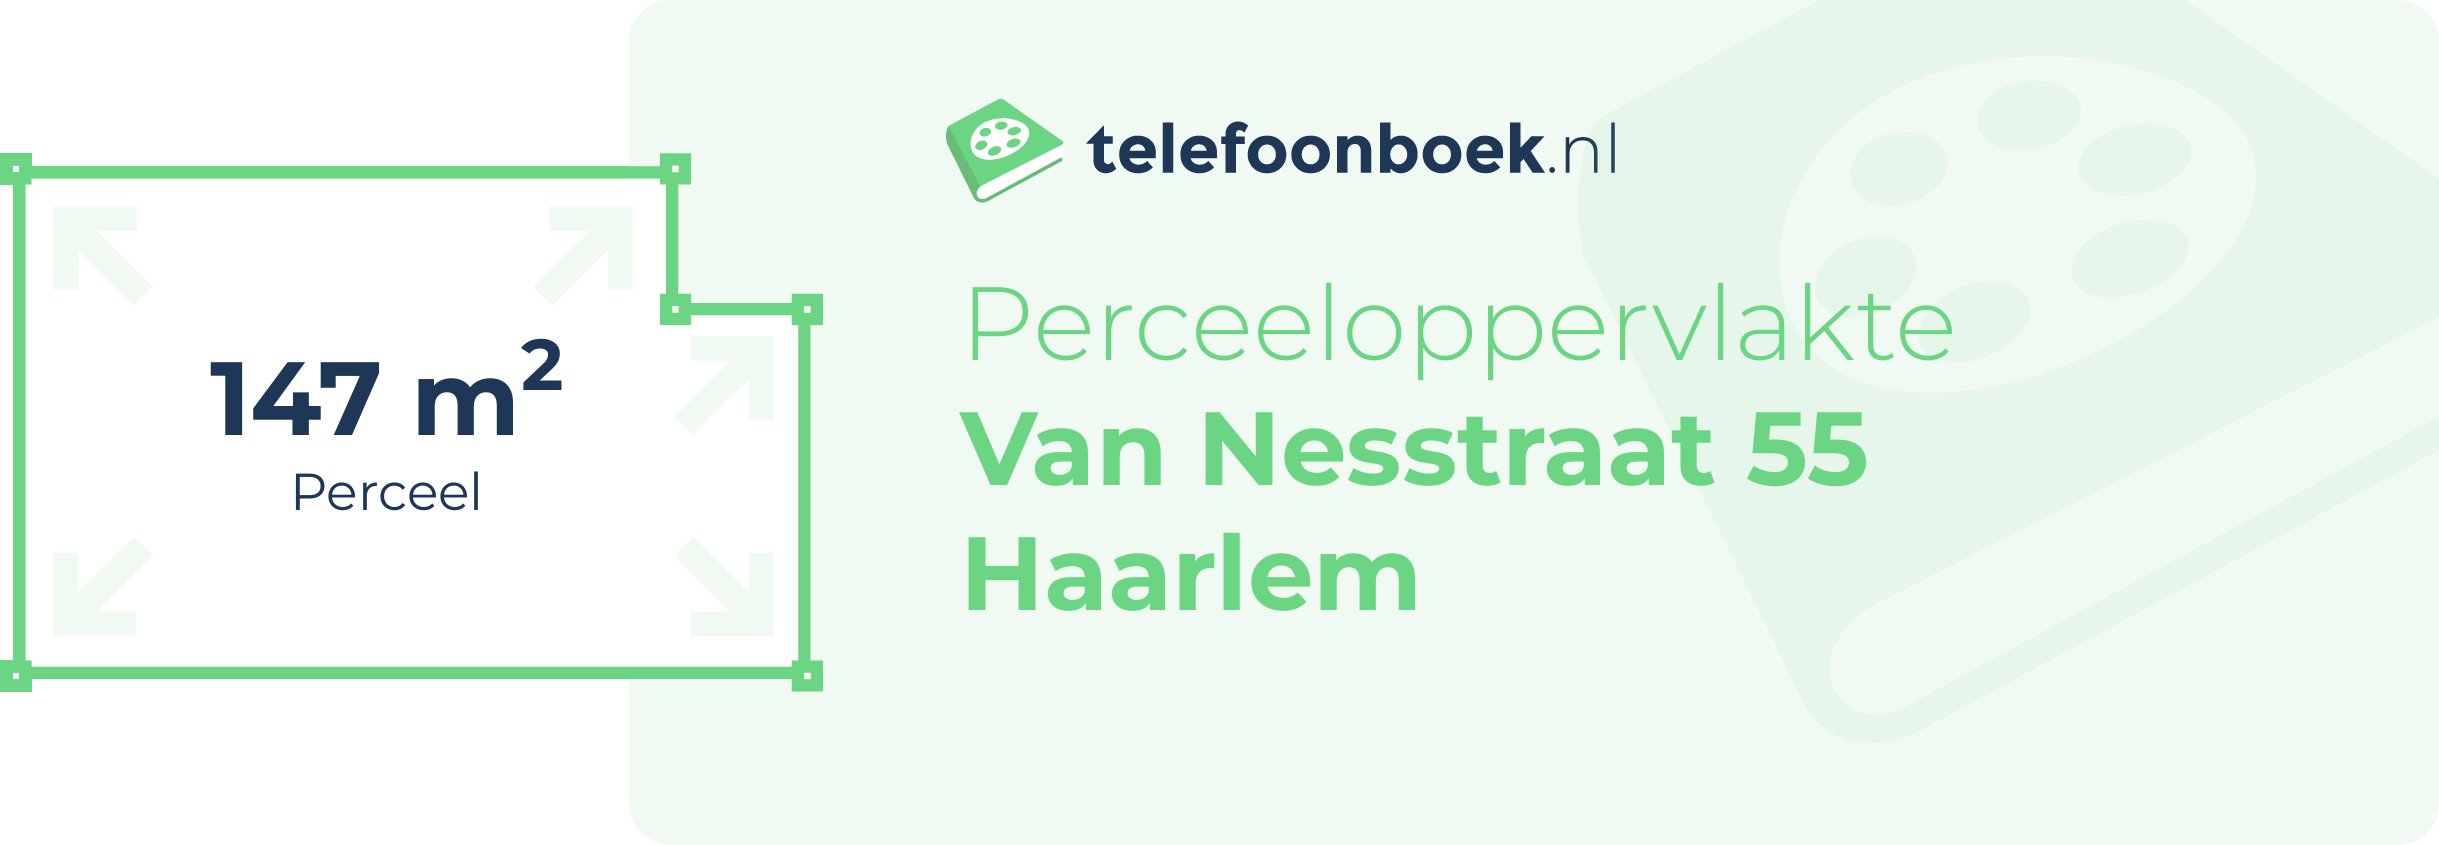 Perceeloppervlakte Van Nesstraat 55 Haarlem